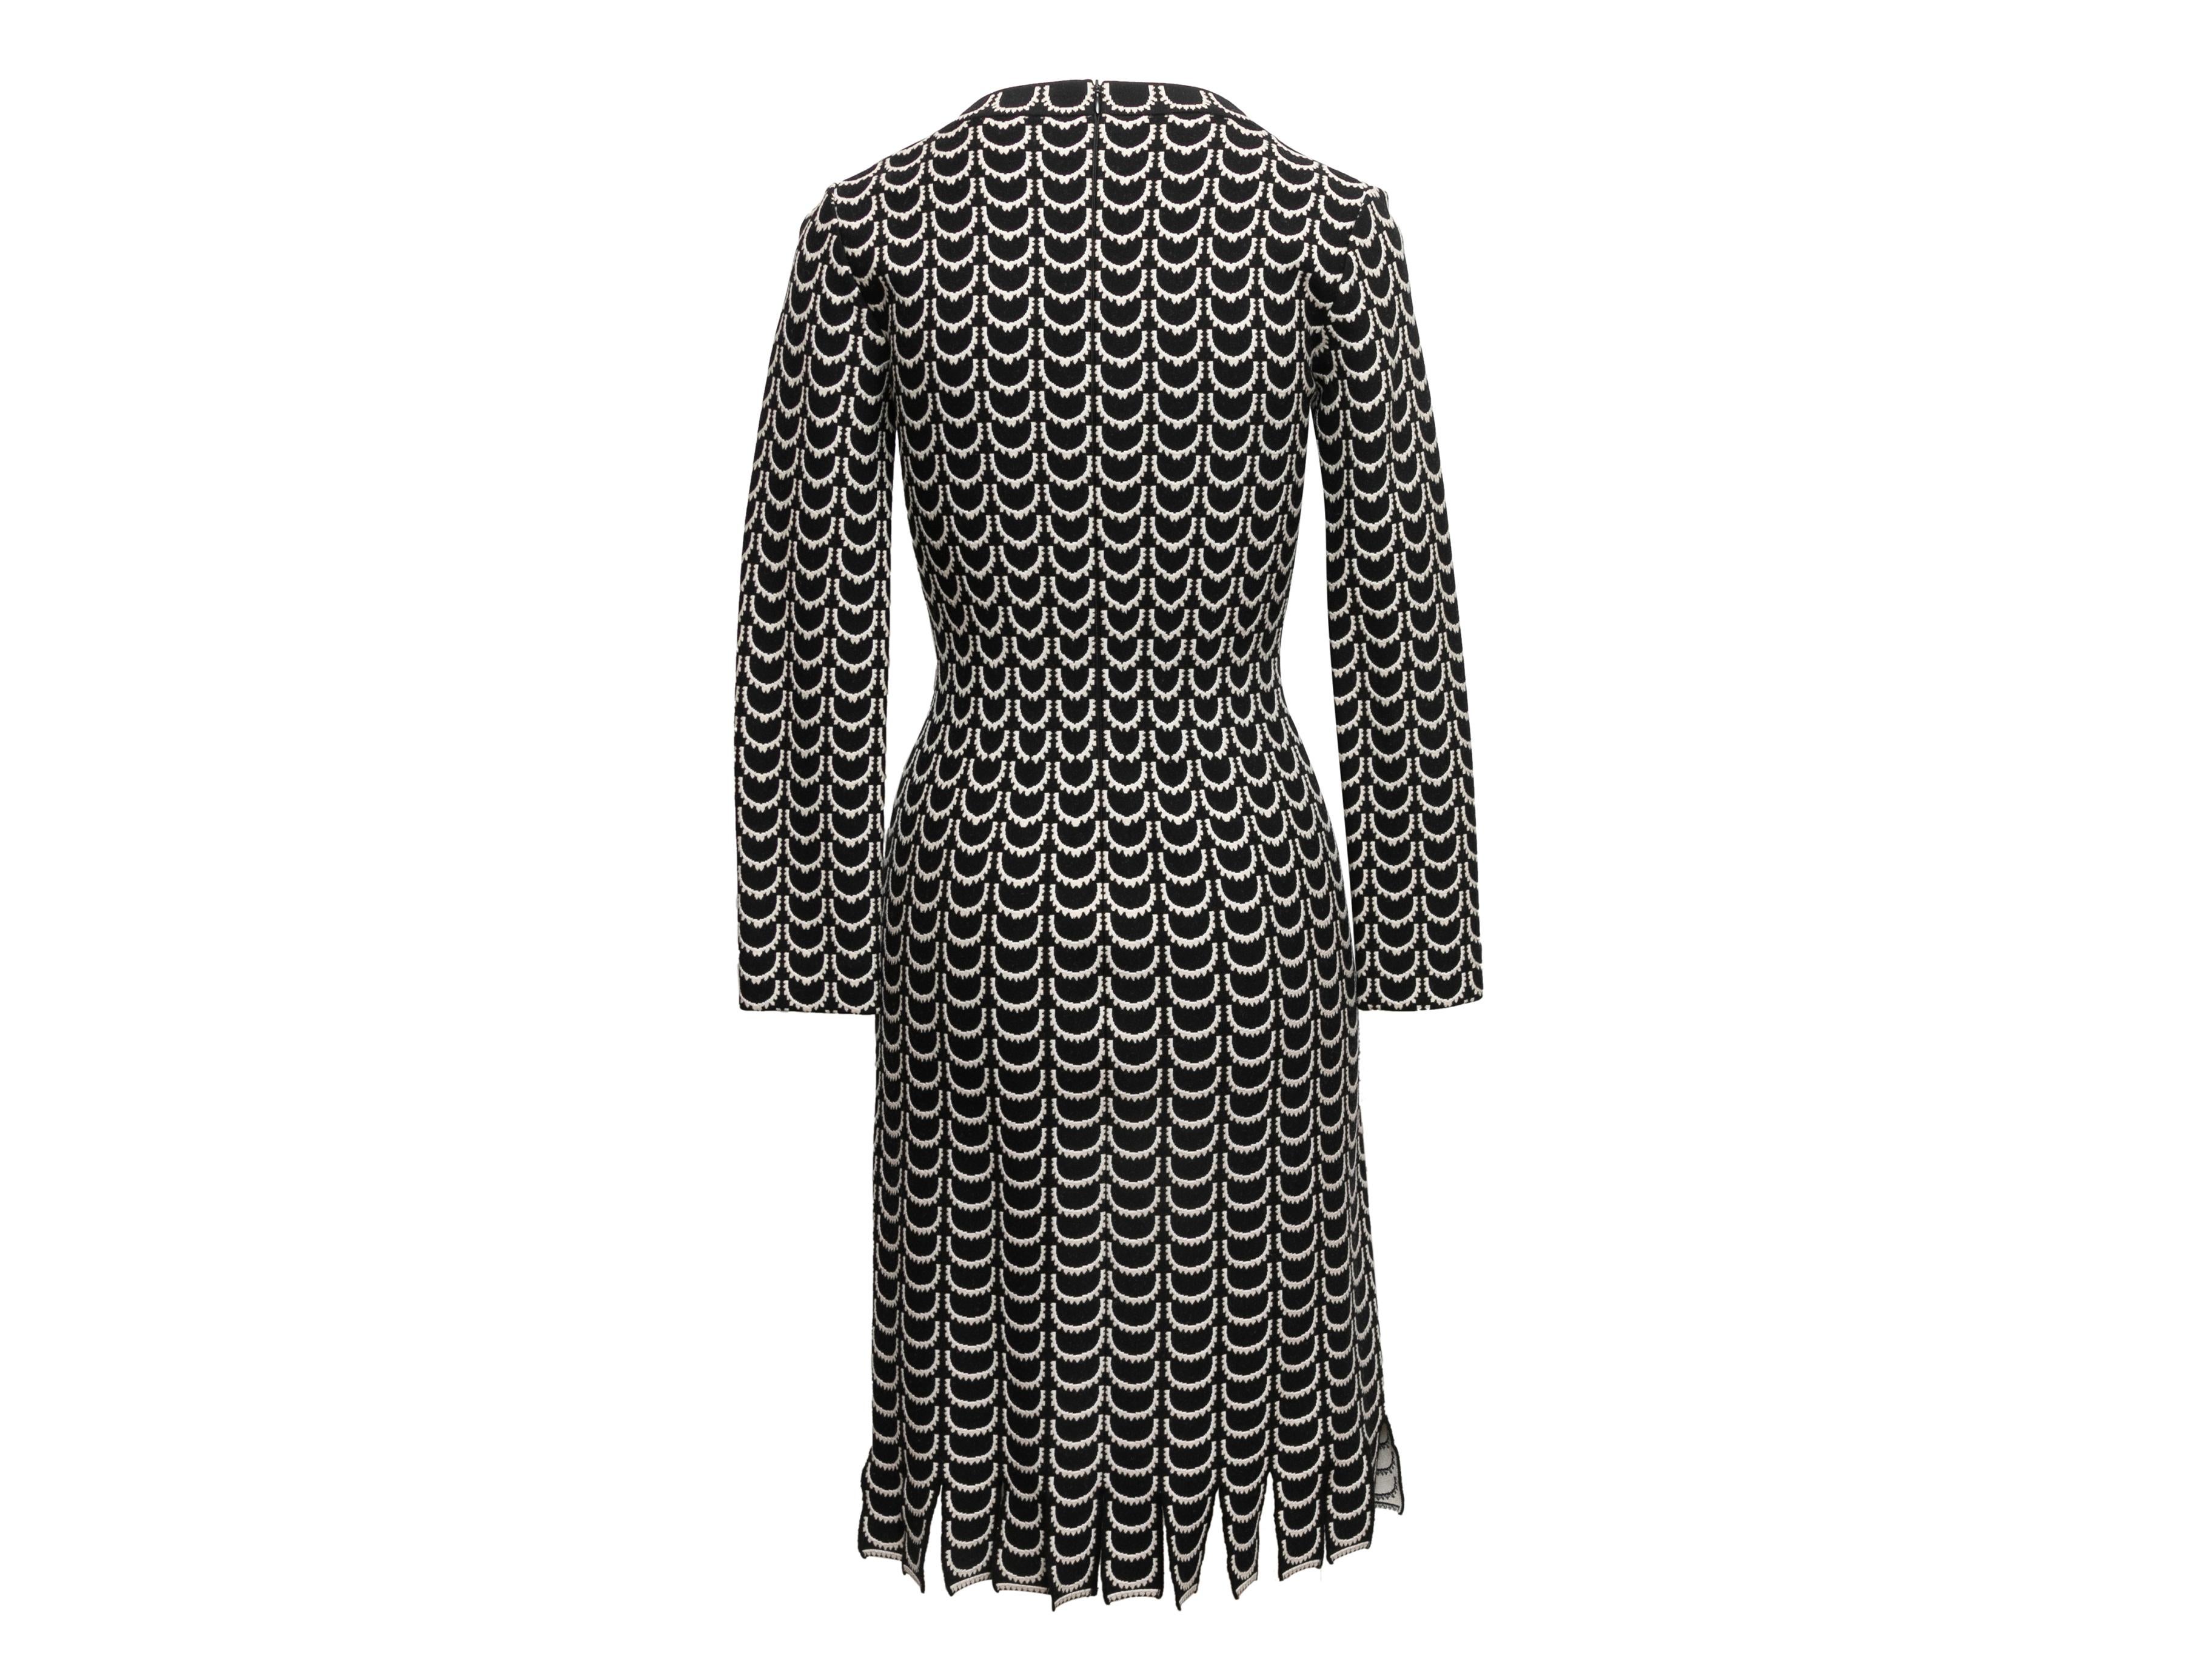 Black and white knit patterned dress by Alaia. V-neck. Long sleeves. Fringe hem. Zip closure at center back. 33